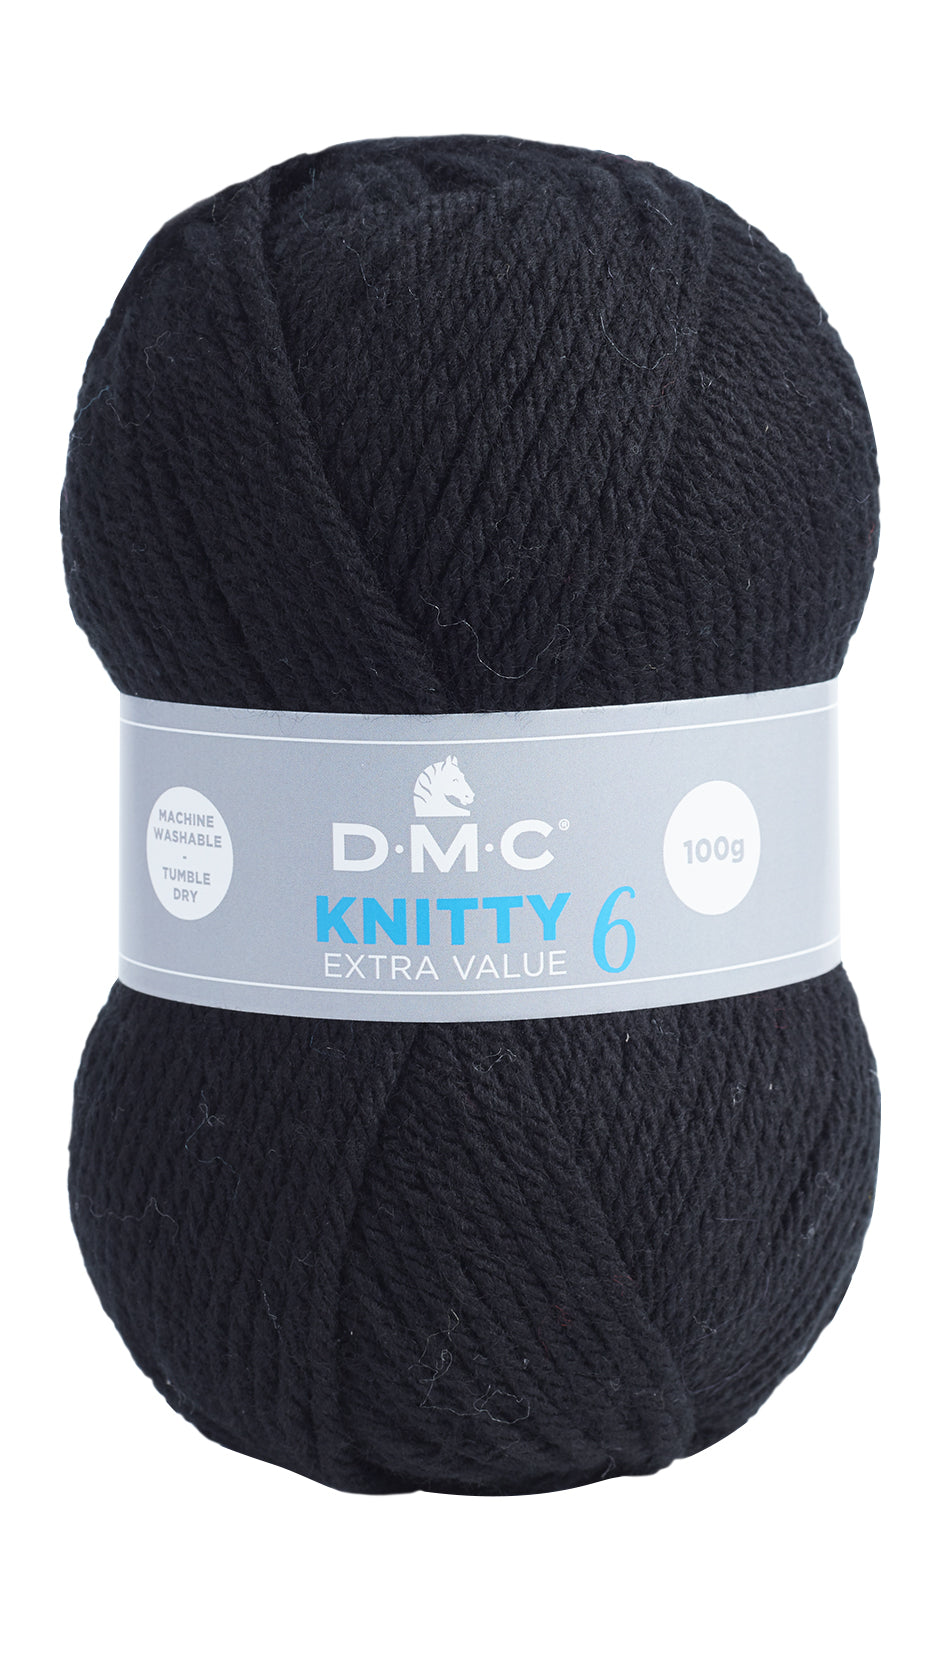 Lana Dmc Knitty 6 Colore 965